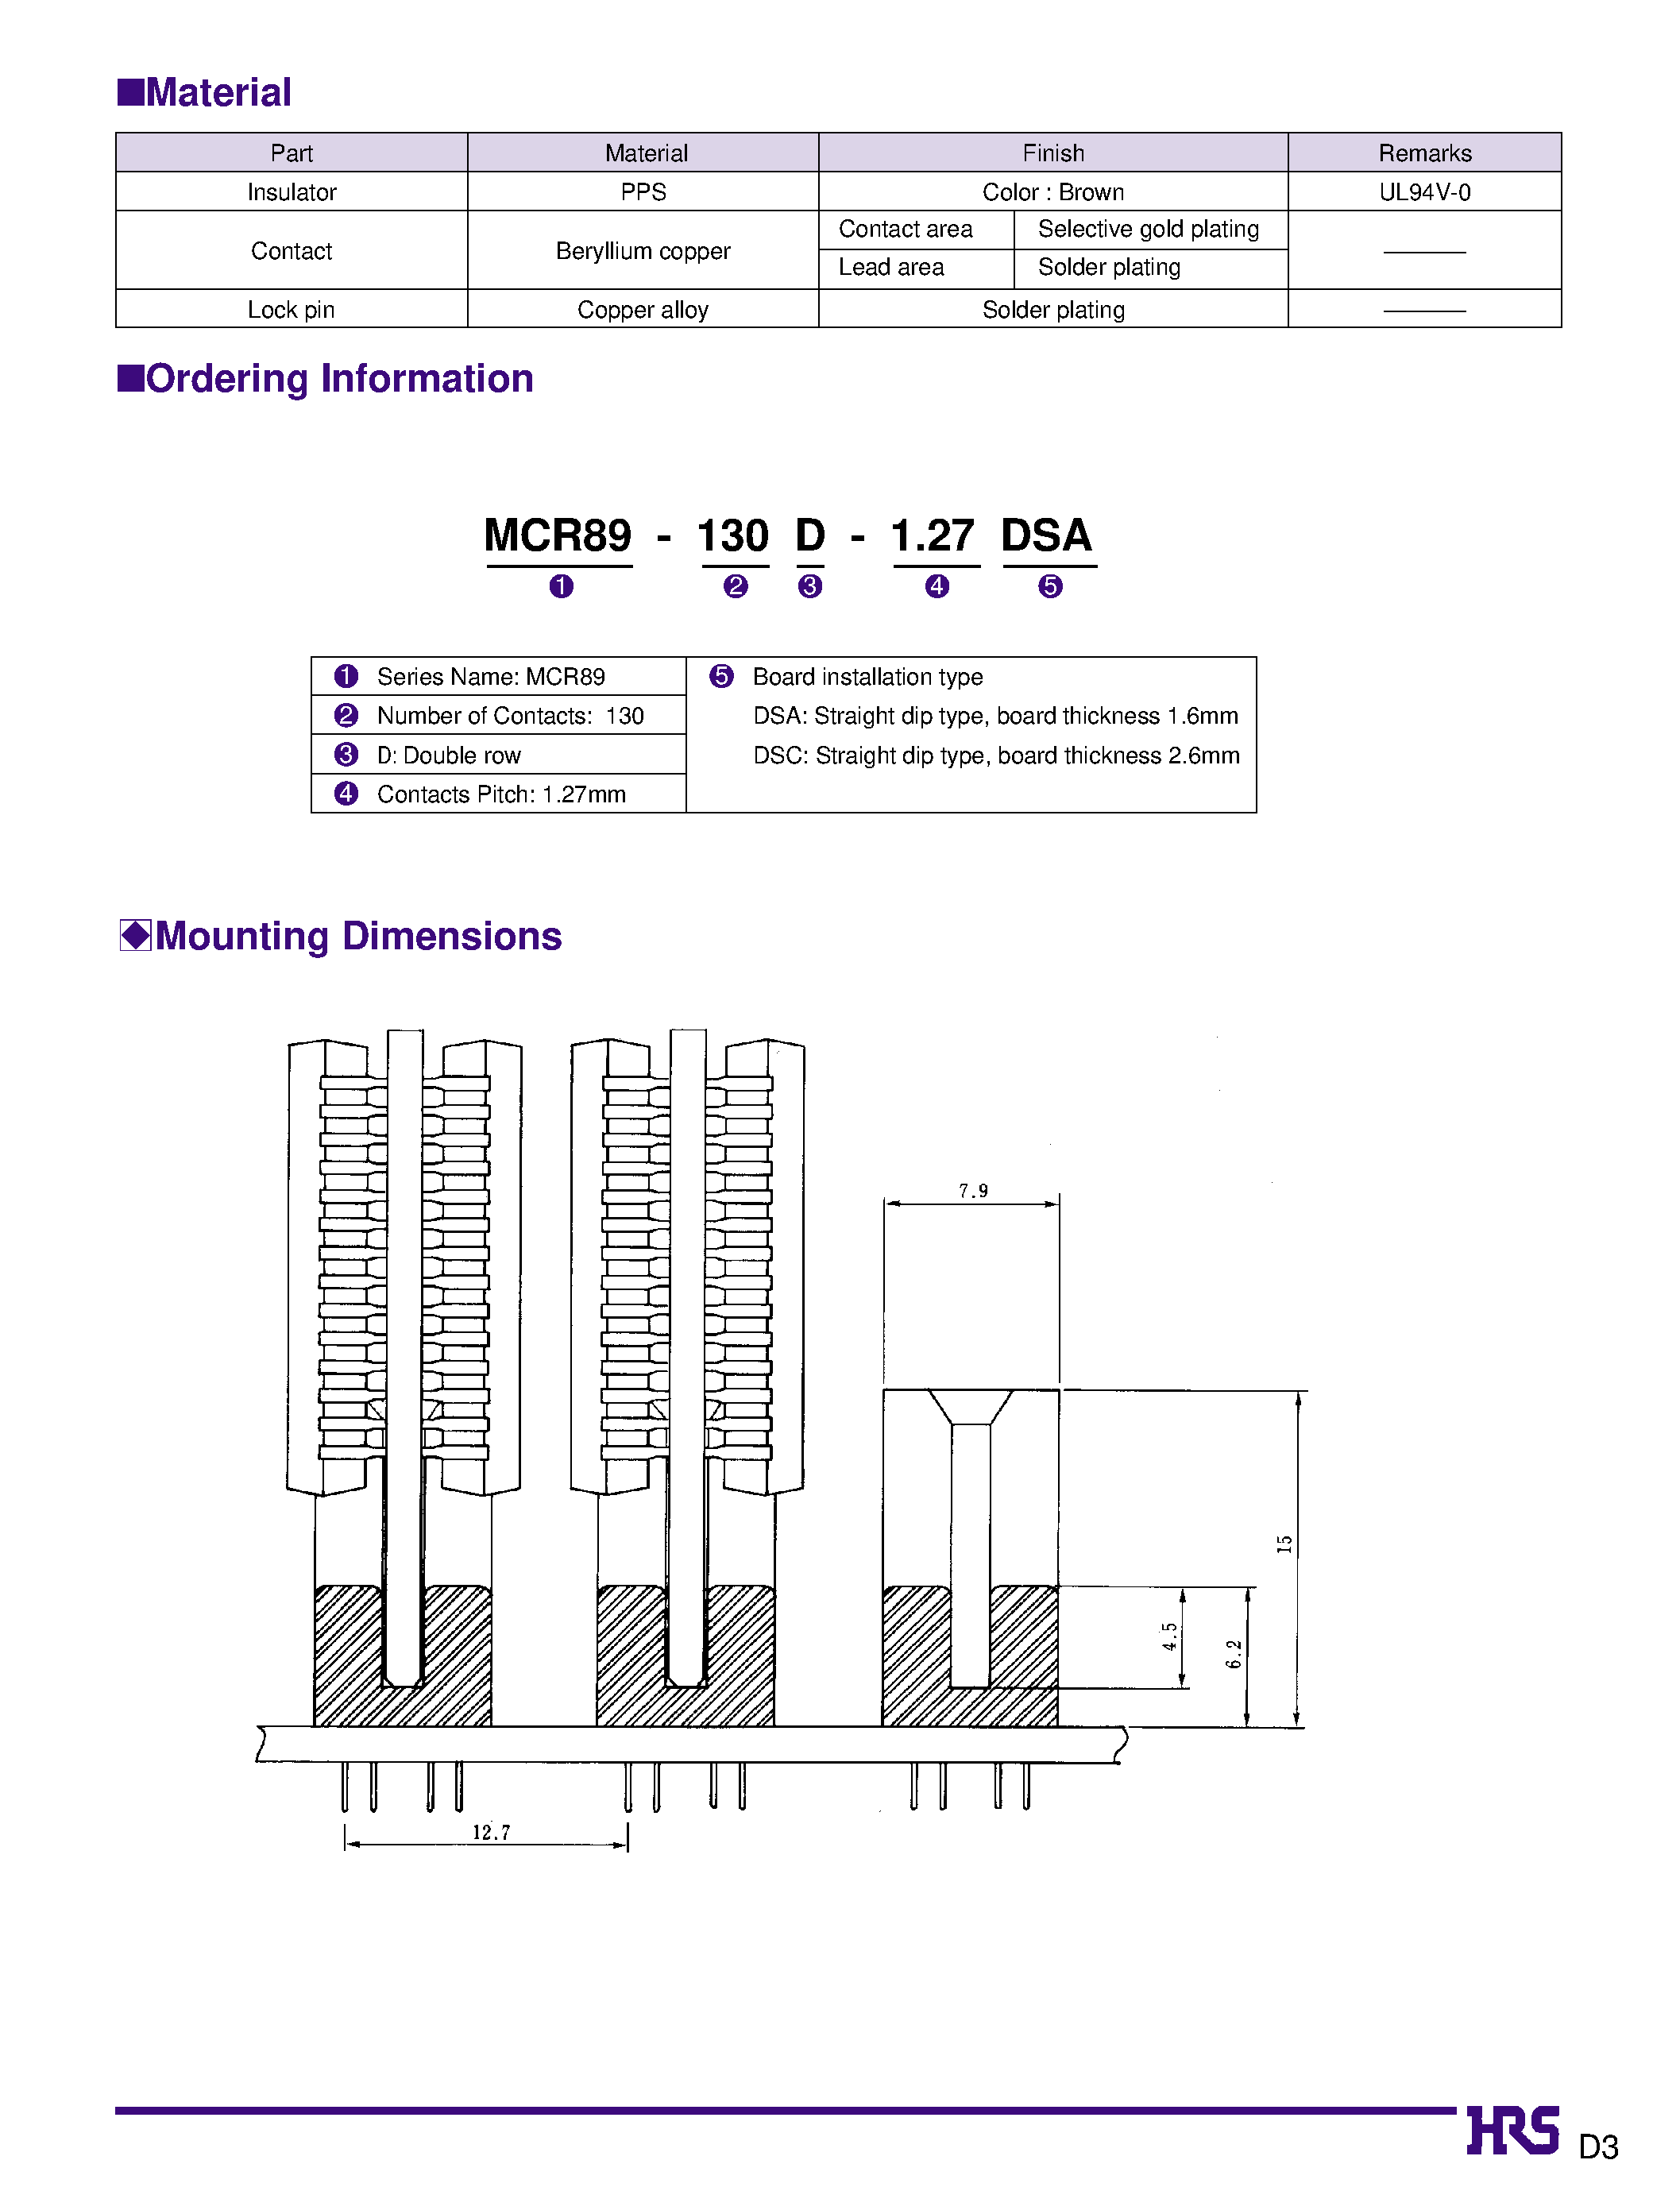 Datasheet MCR89-130D-DC - Socket for Memory Module Board page 2